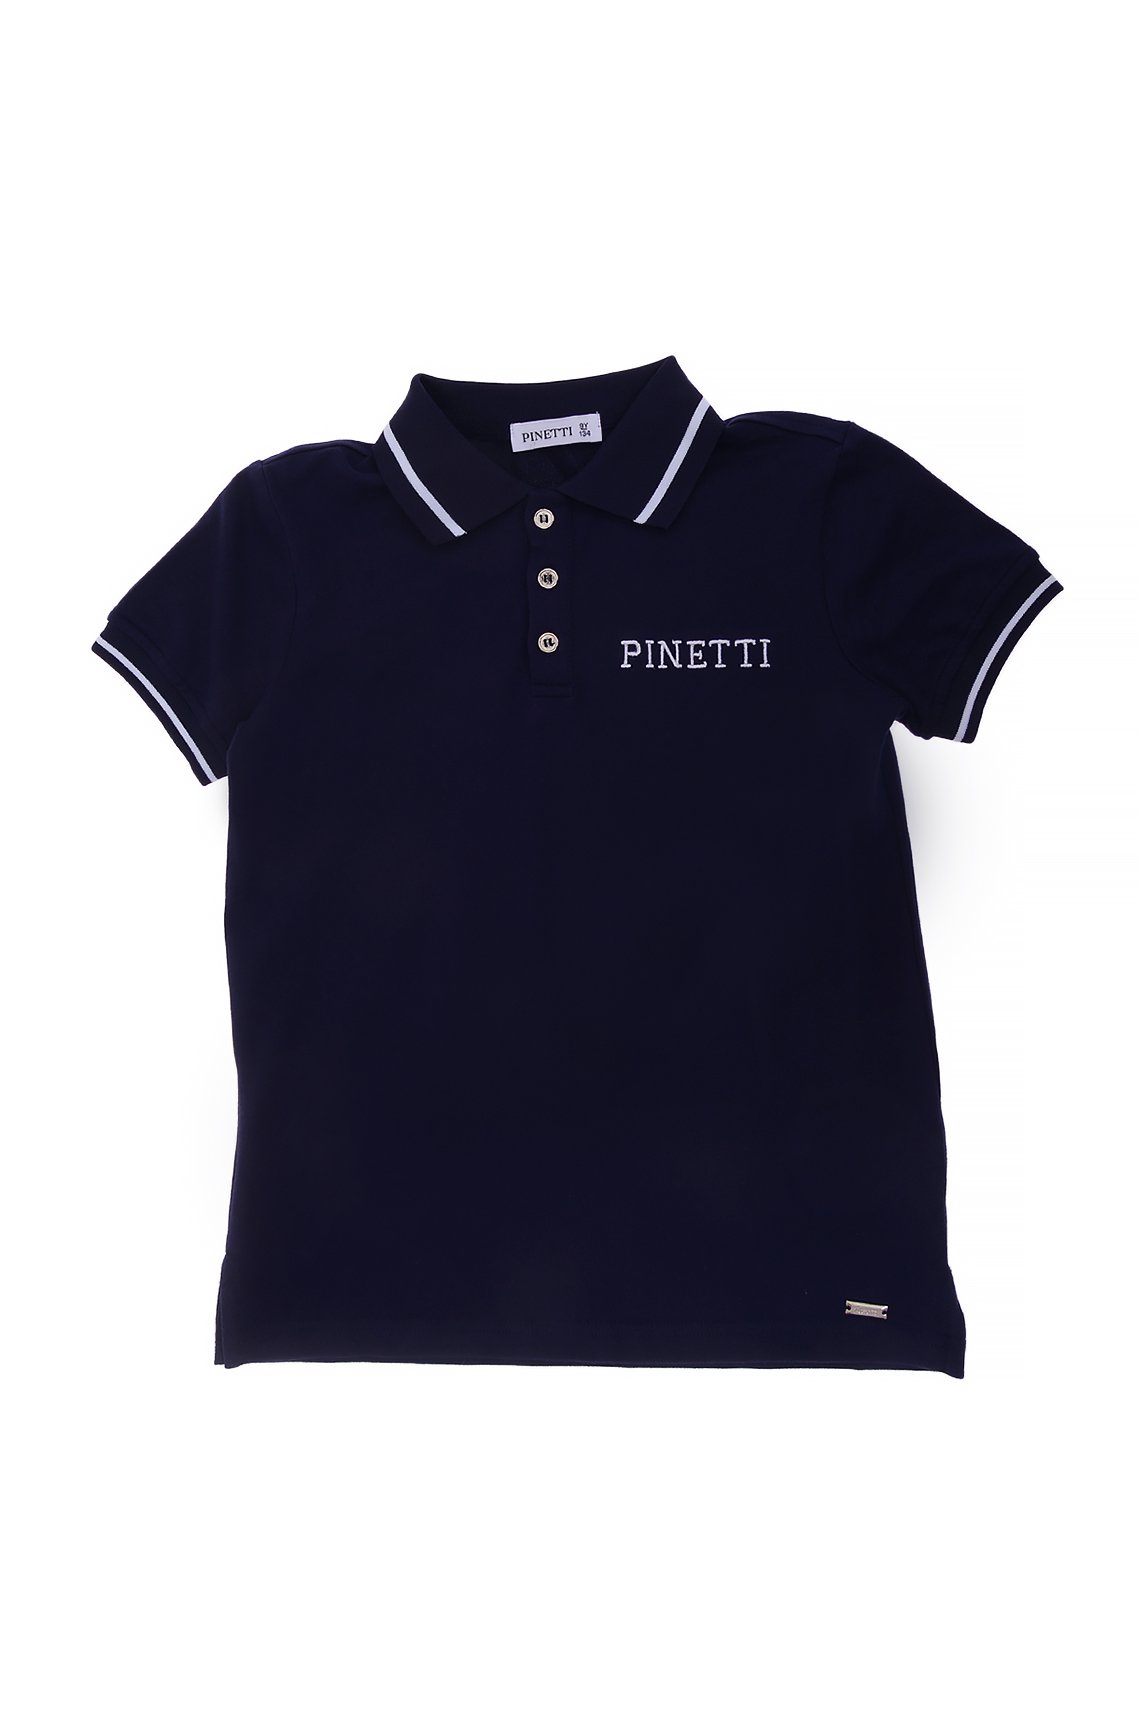 Pinetti Детская Одежда Интернет Магазин